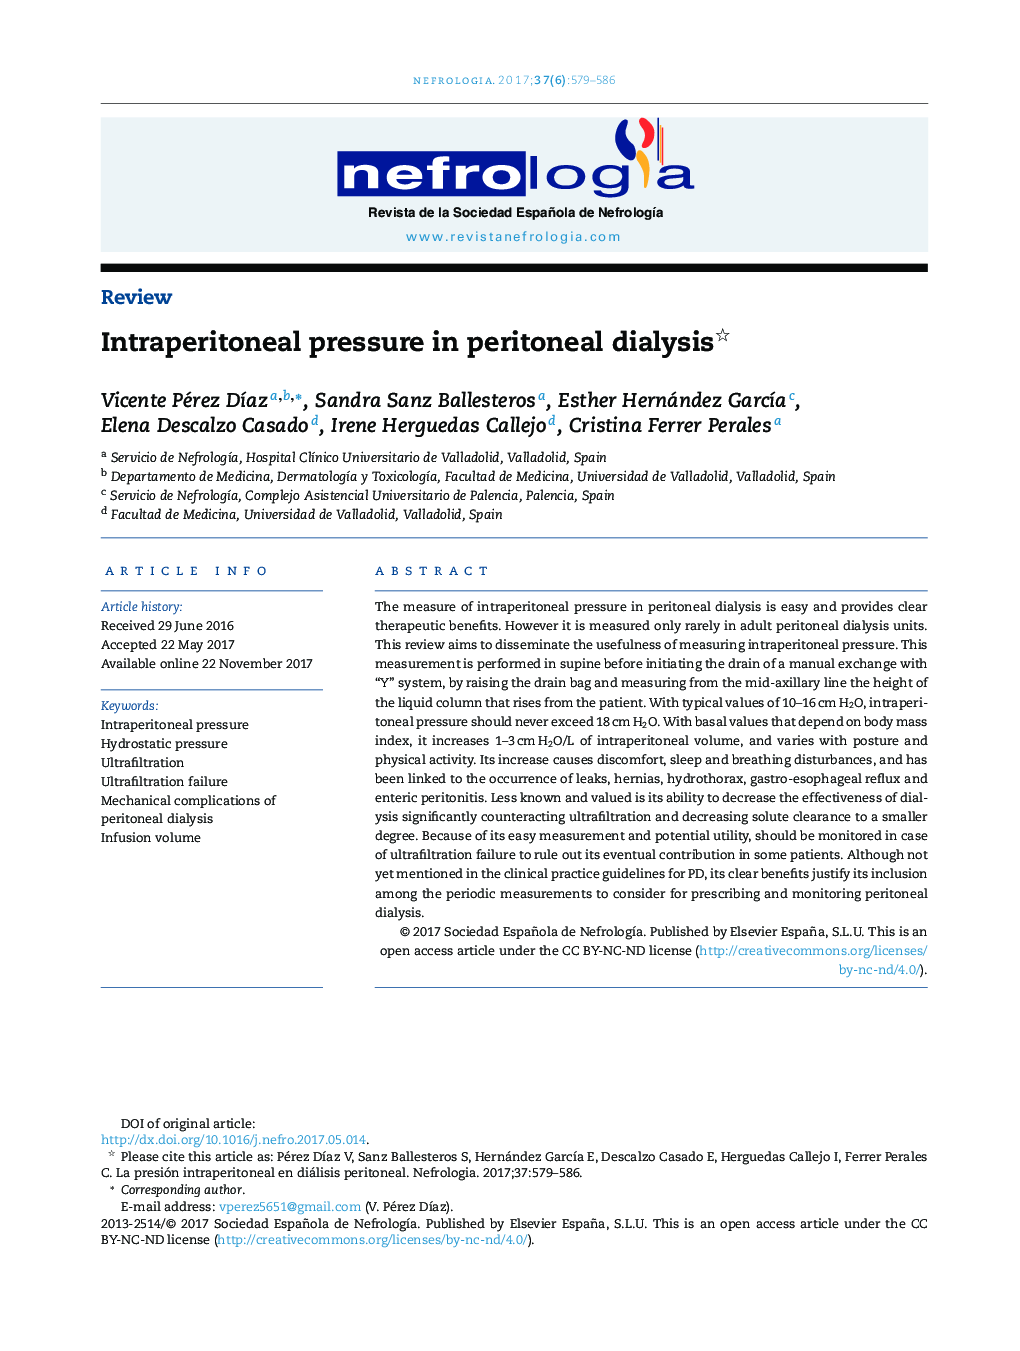 Intraperitoneal pressure in peritoneal dialysis